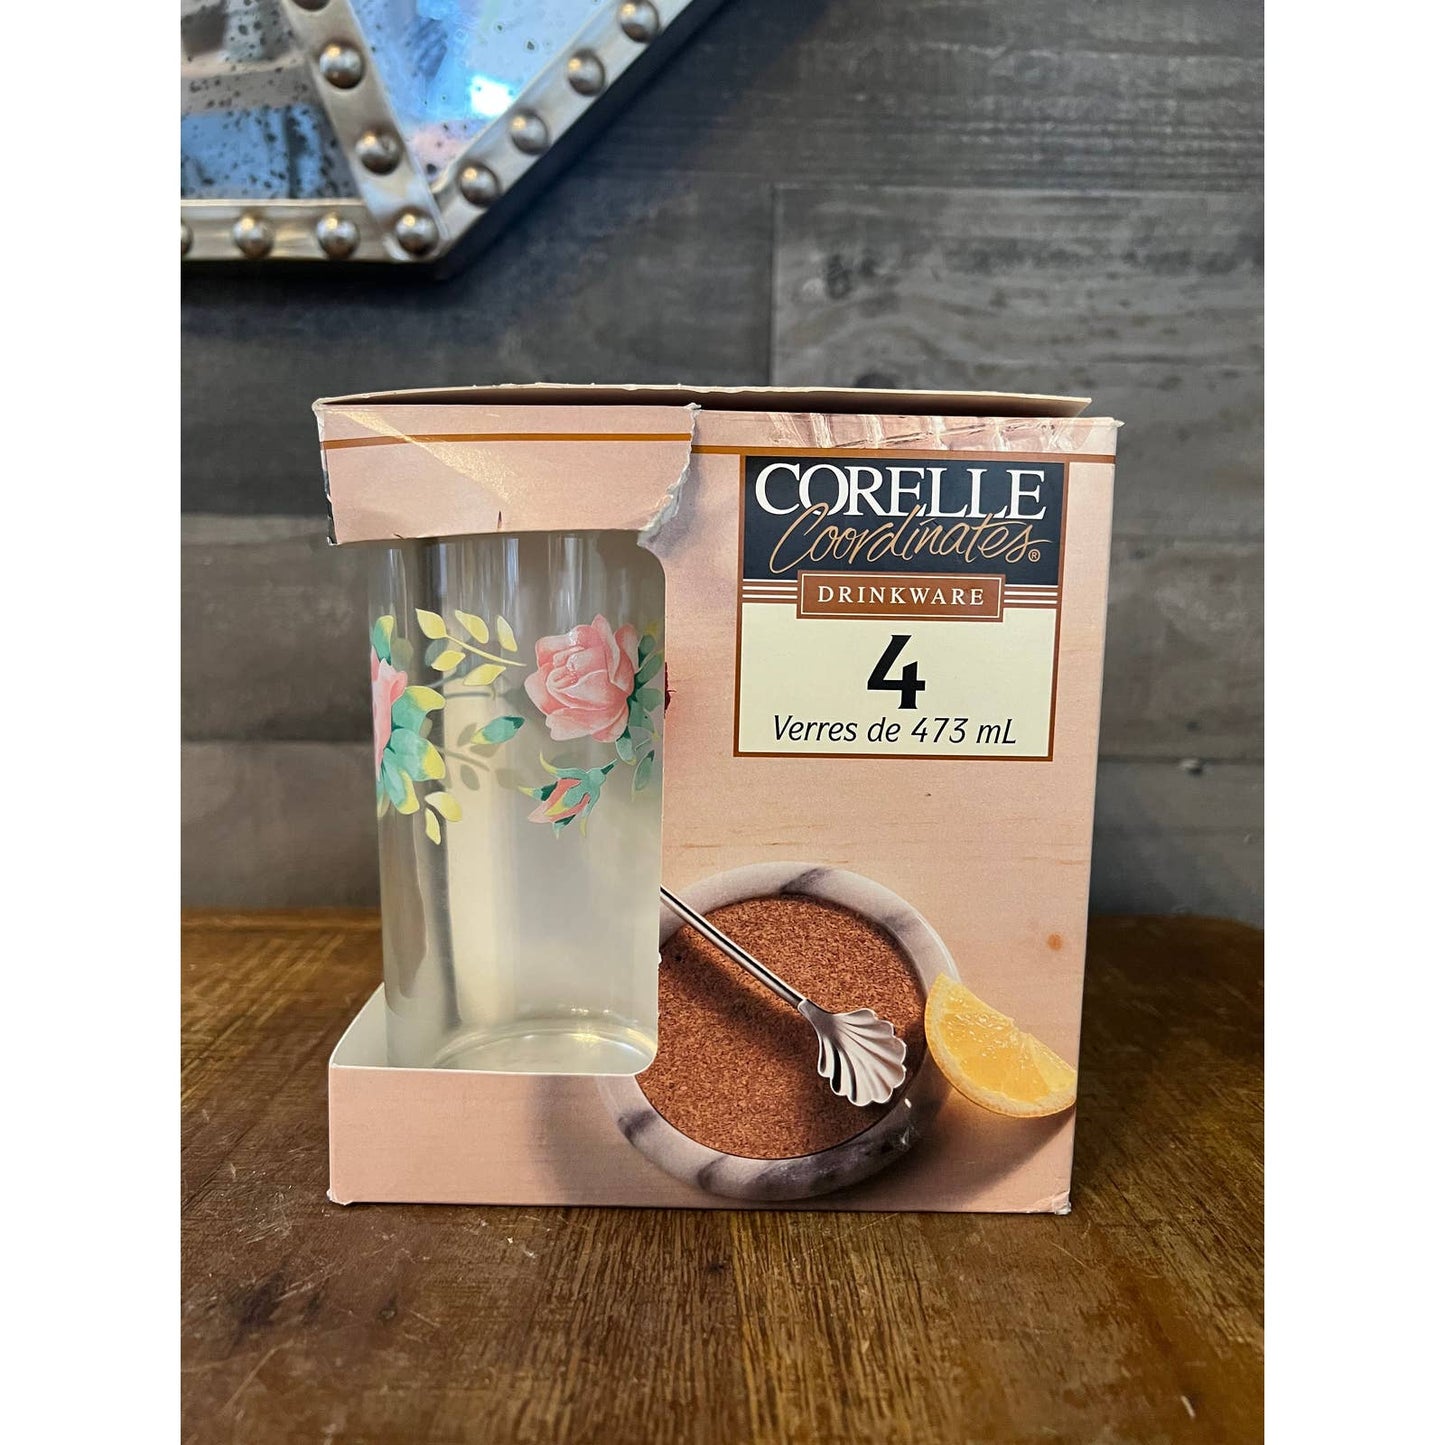 NIB vintage set of 4 Corelle elegant rose pattern 16oz cooler glasses - new in box Corelle glasses - spring tall glass floral tumblers